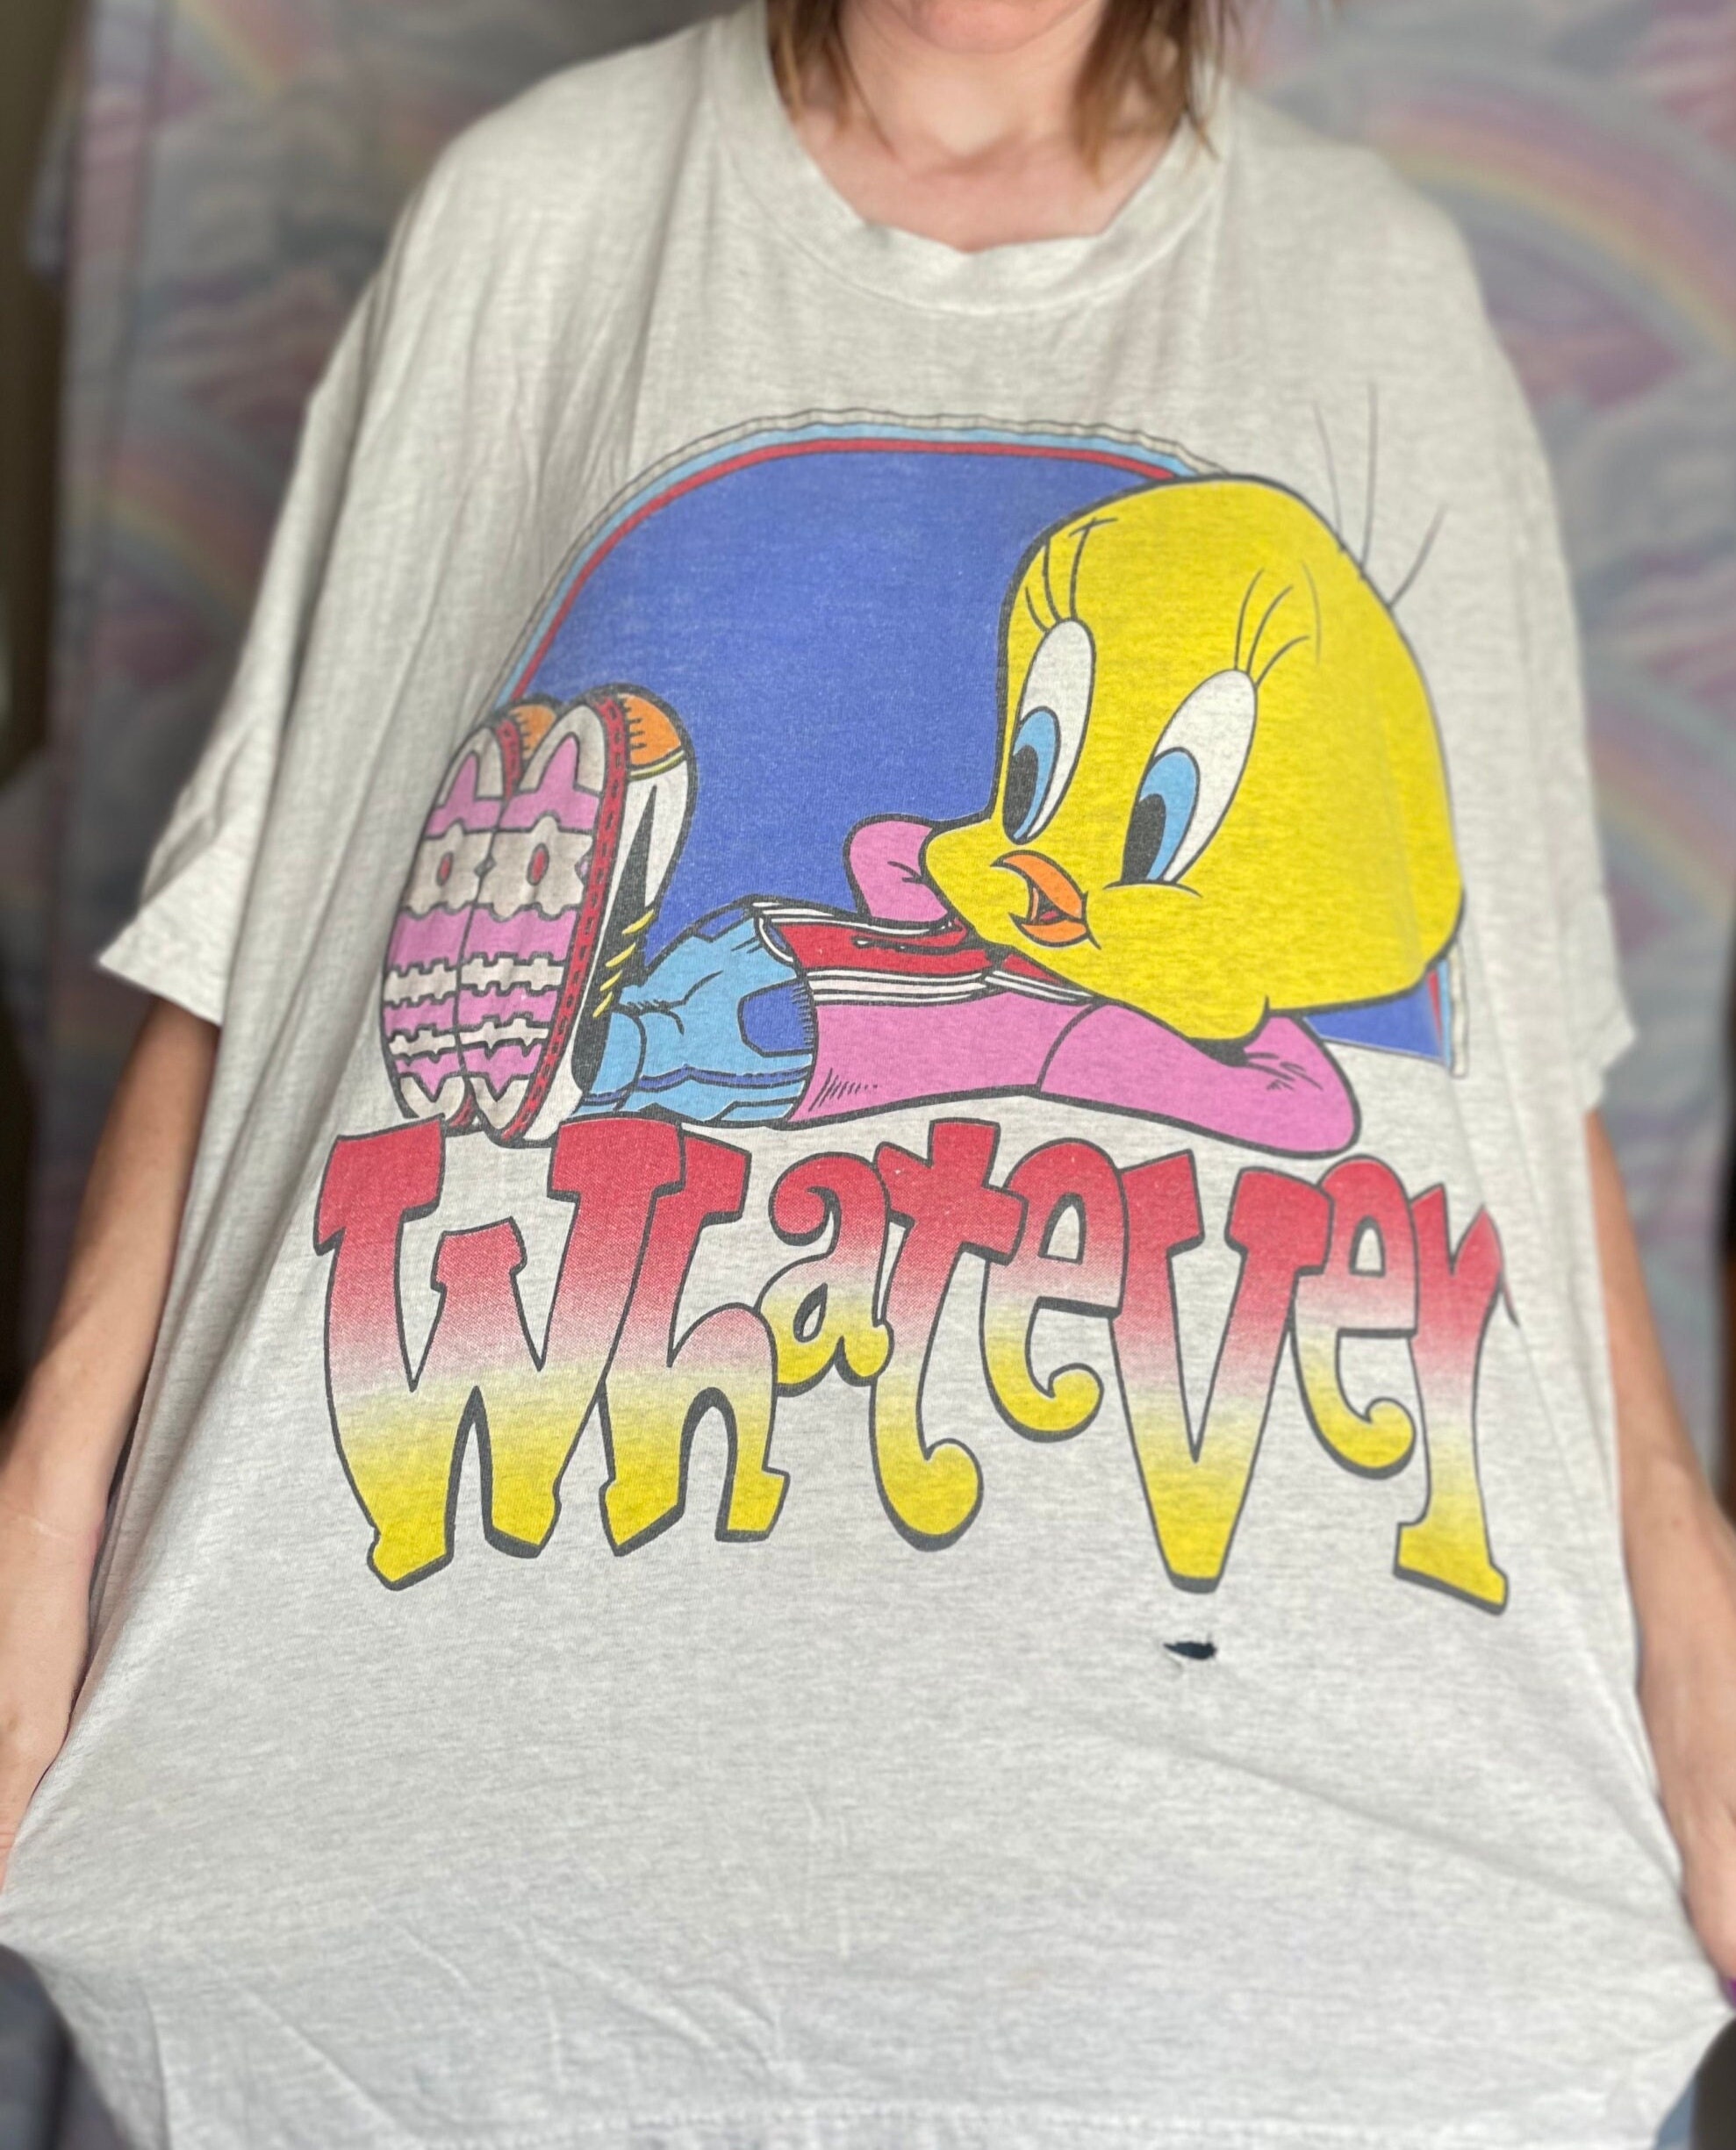 Looney Tunes Mens Tweety Bird Wearing Glasses Funny Gray Shirt New XL